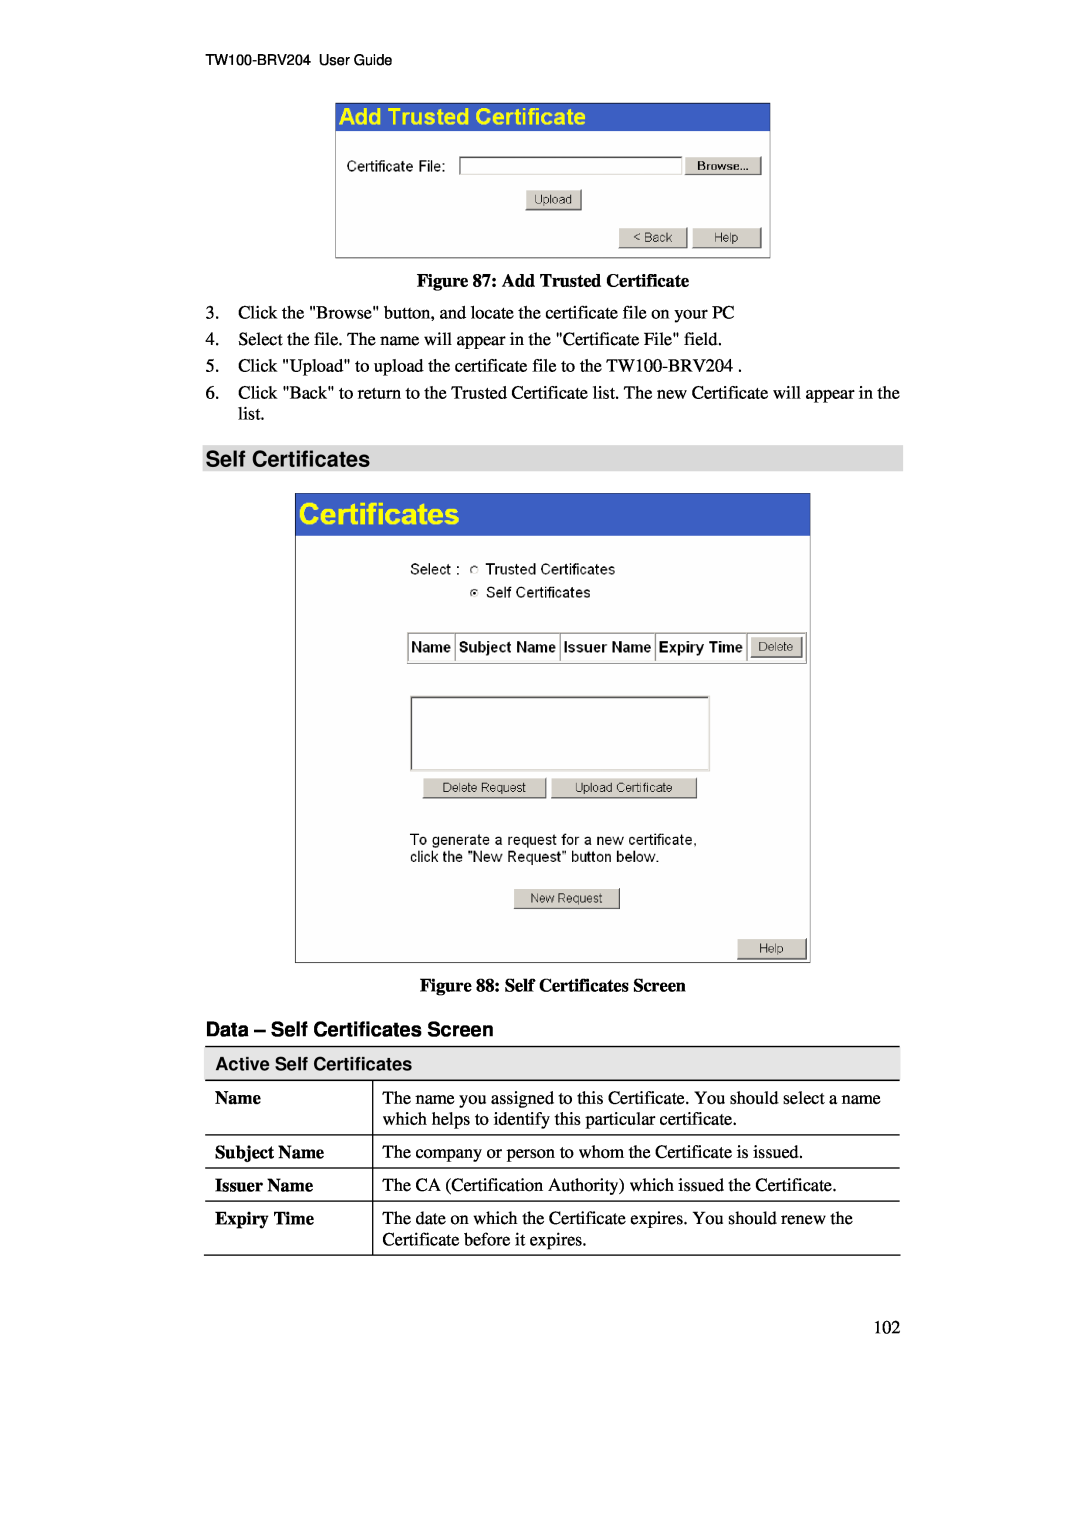 TRENDnet BRV204 manual Add Trusted Certificate, Self Certificates Screen, Active Self Certificates, Subject Name 